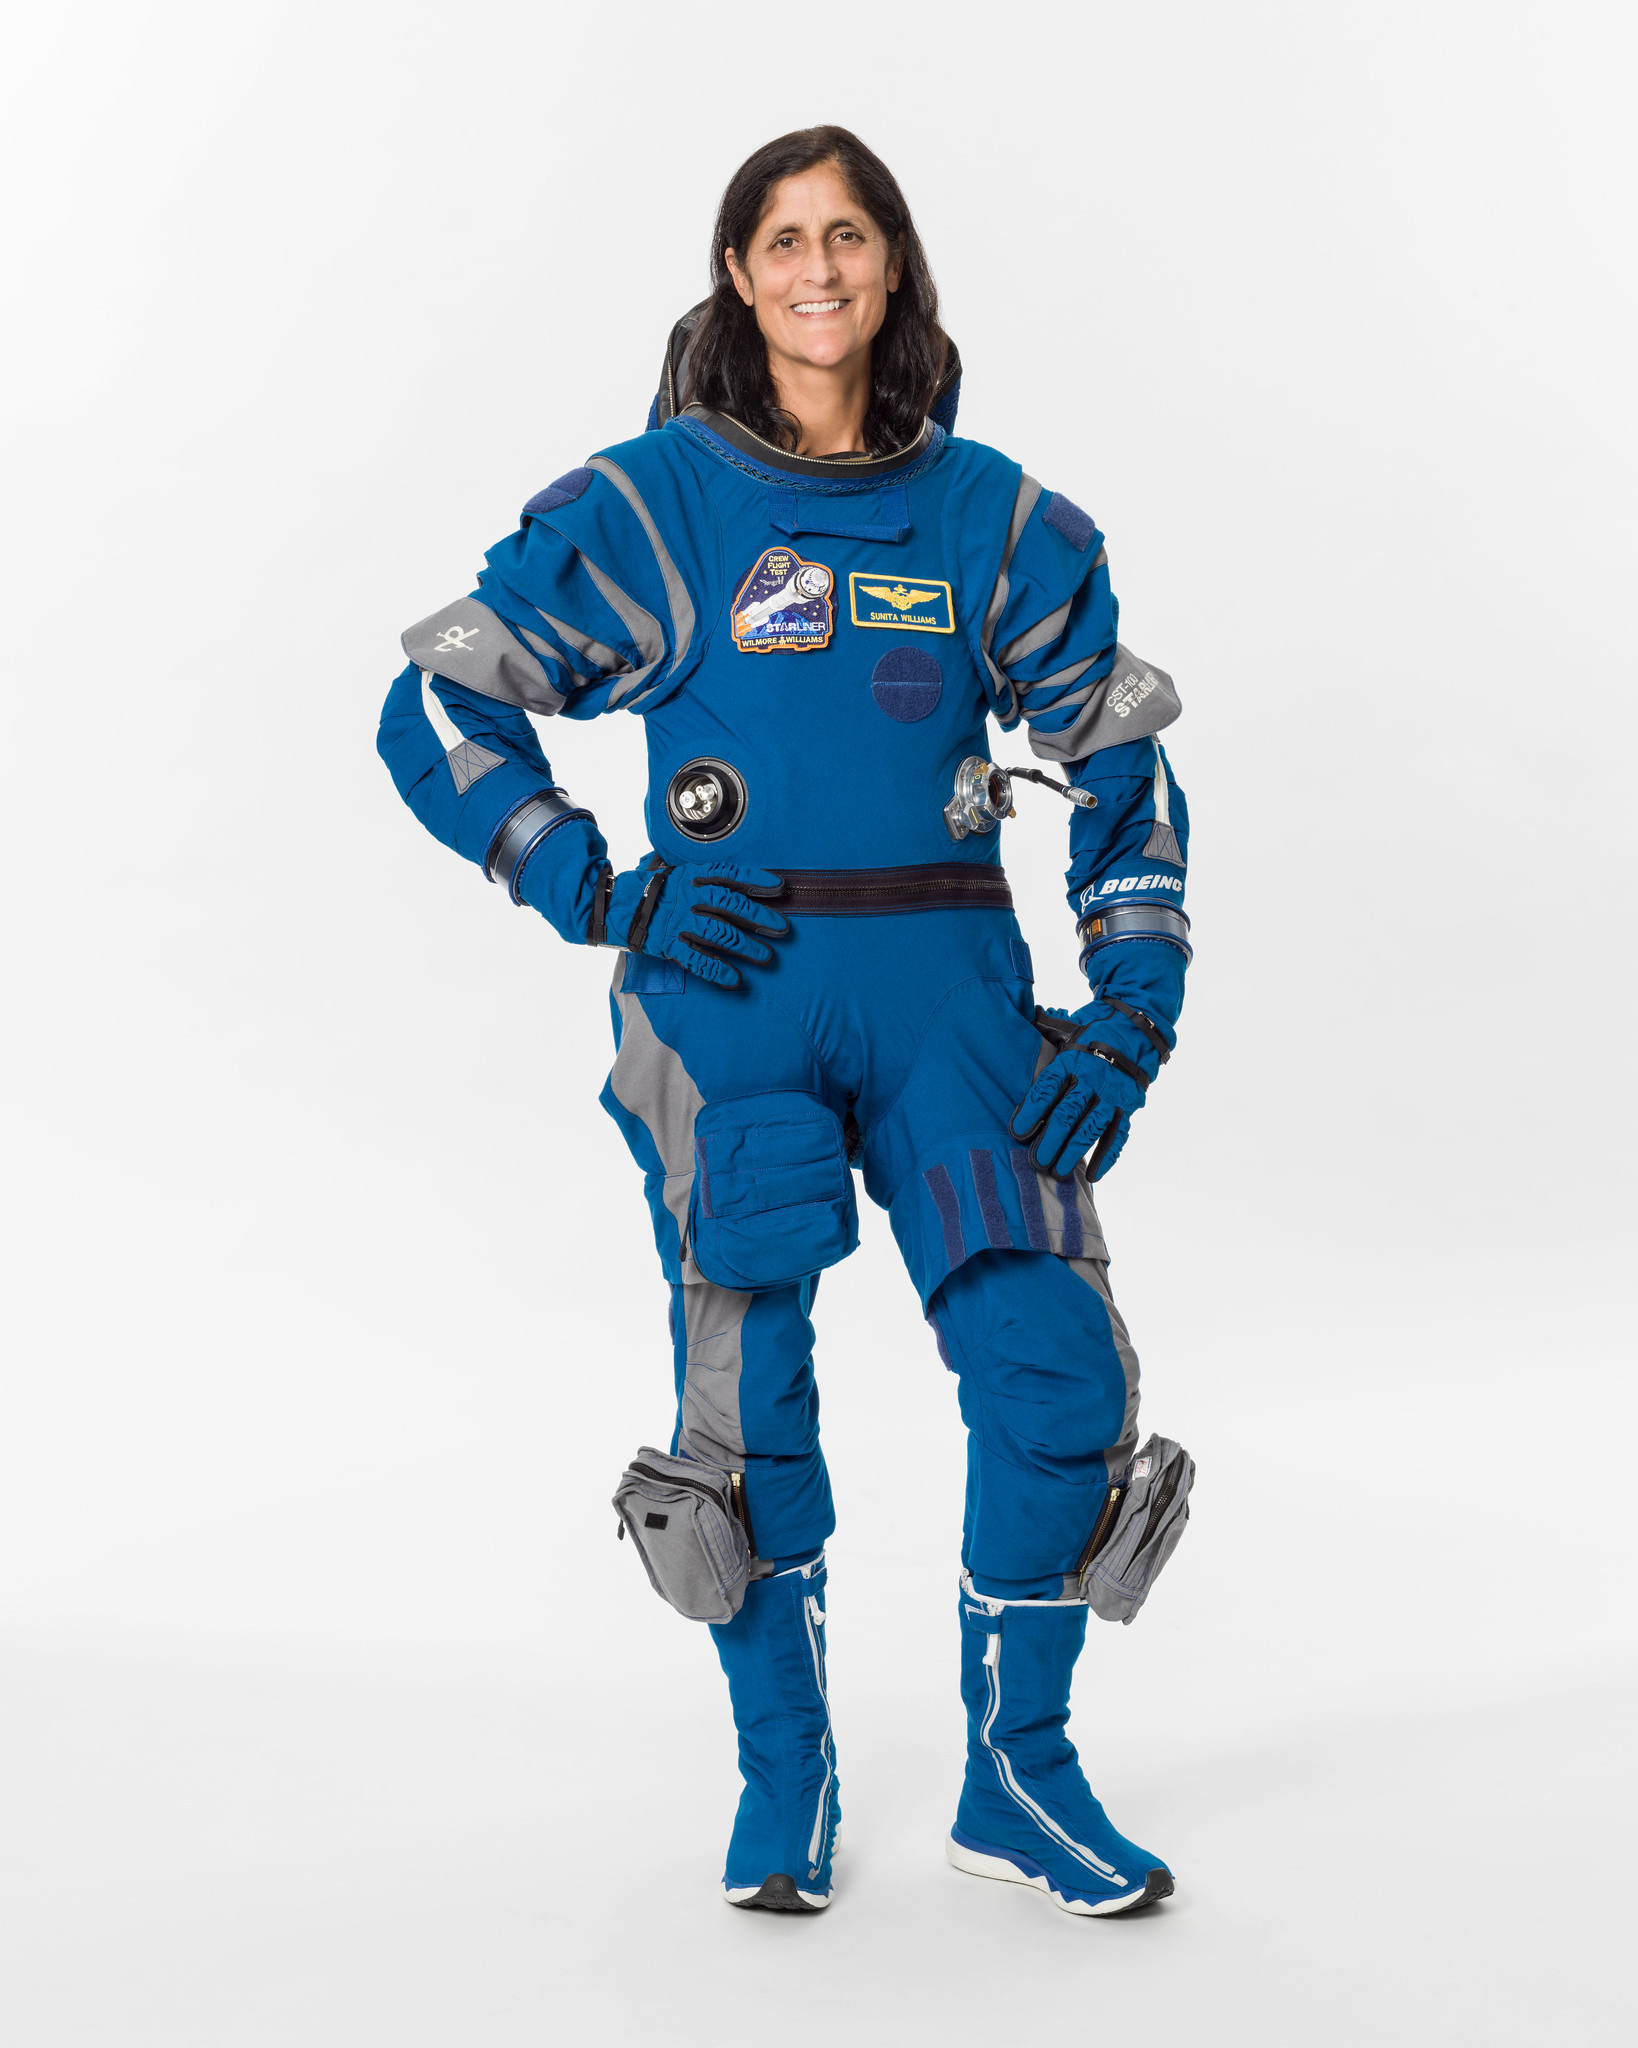 an astronaut poses for a portrait in a blue flight suit